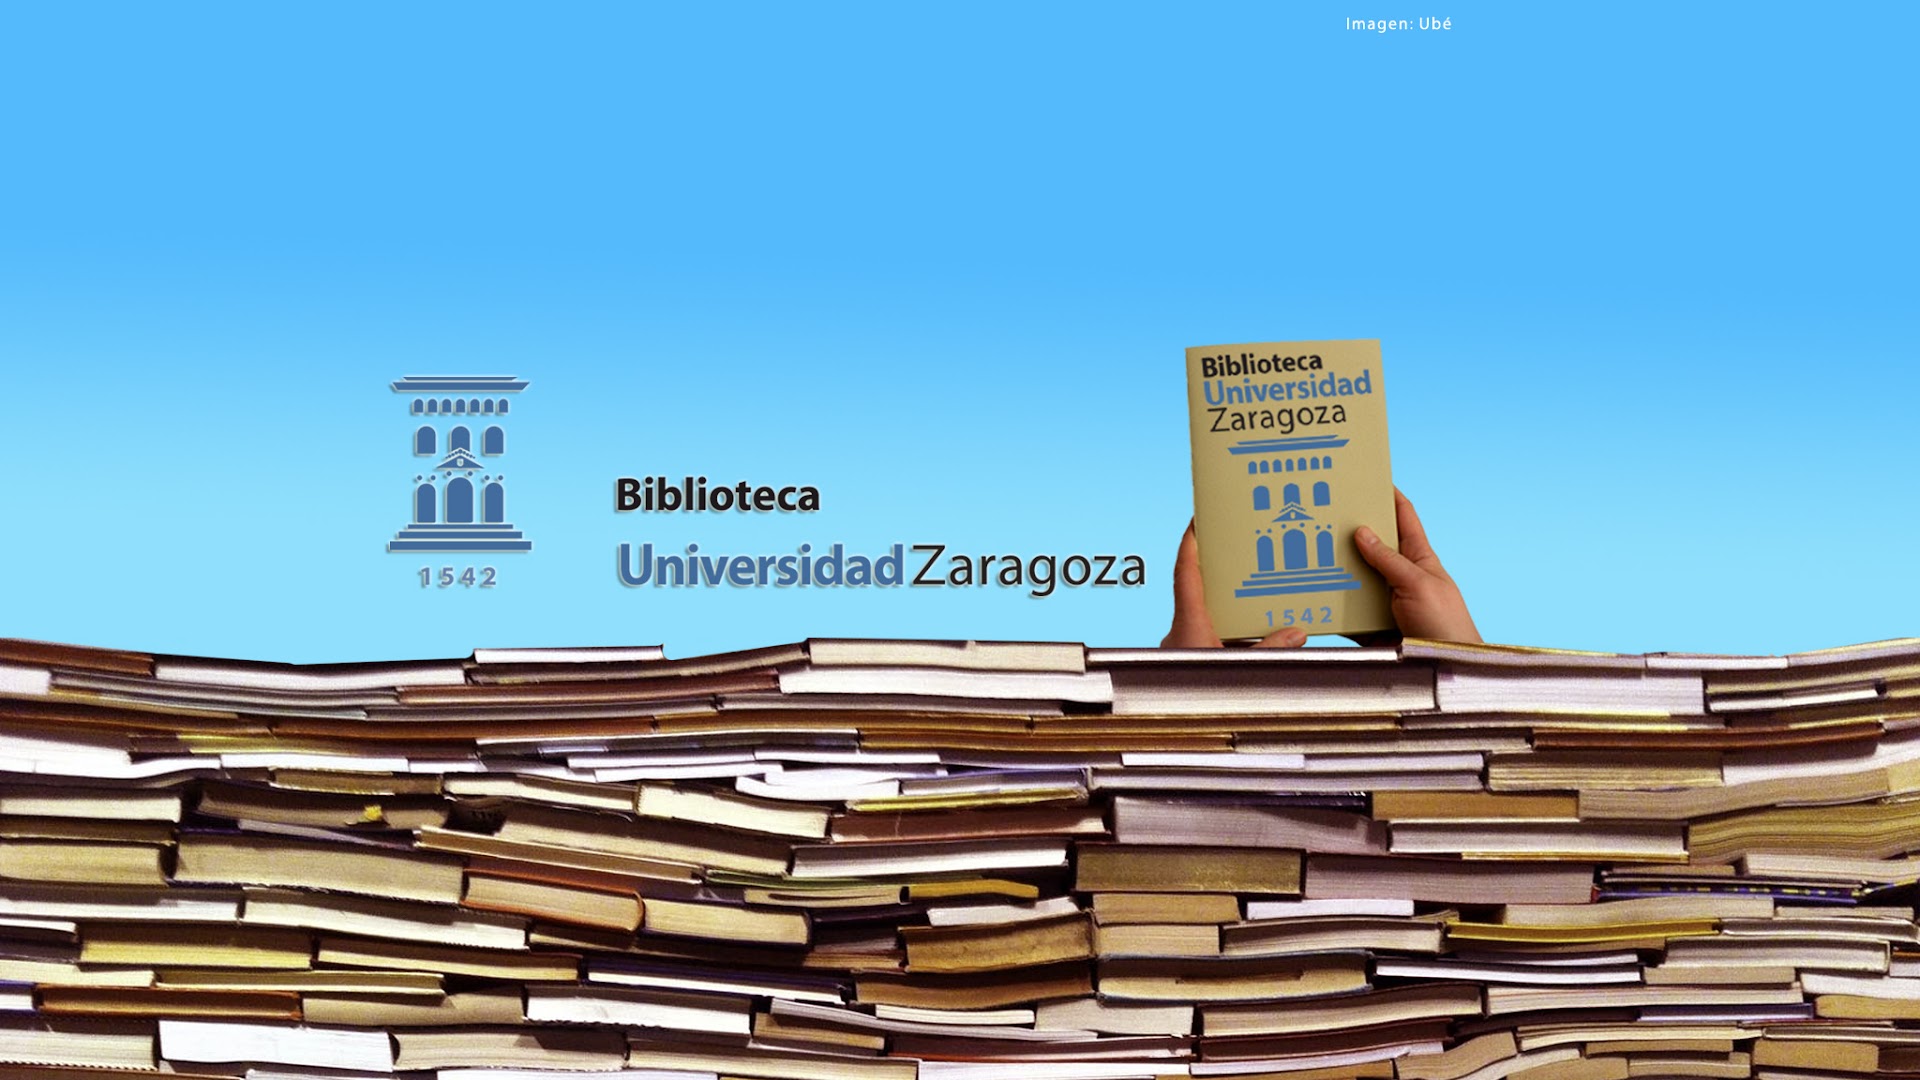 Universidad de Zaragoza: Biblioteca de la Universidad de Zaragoza